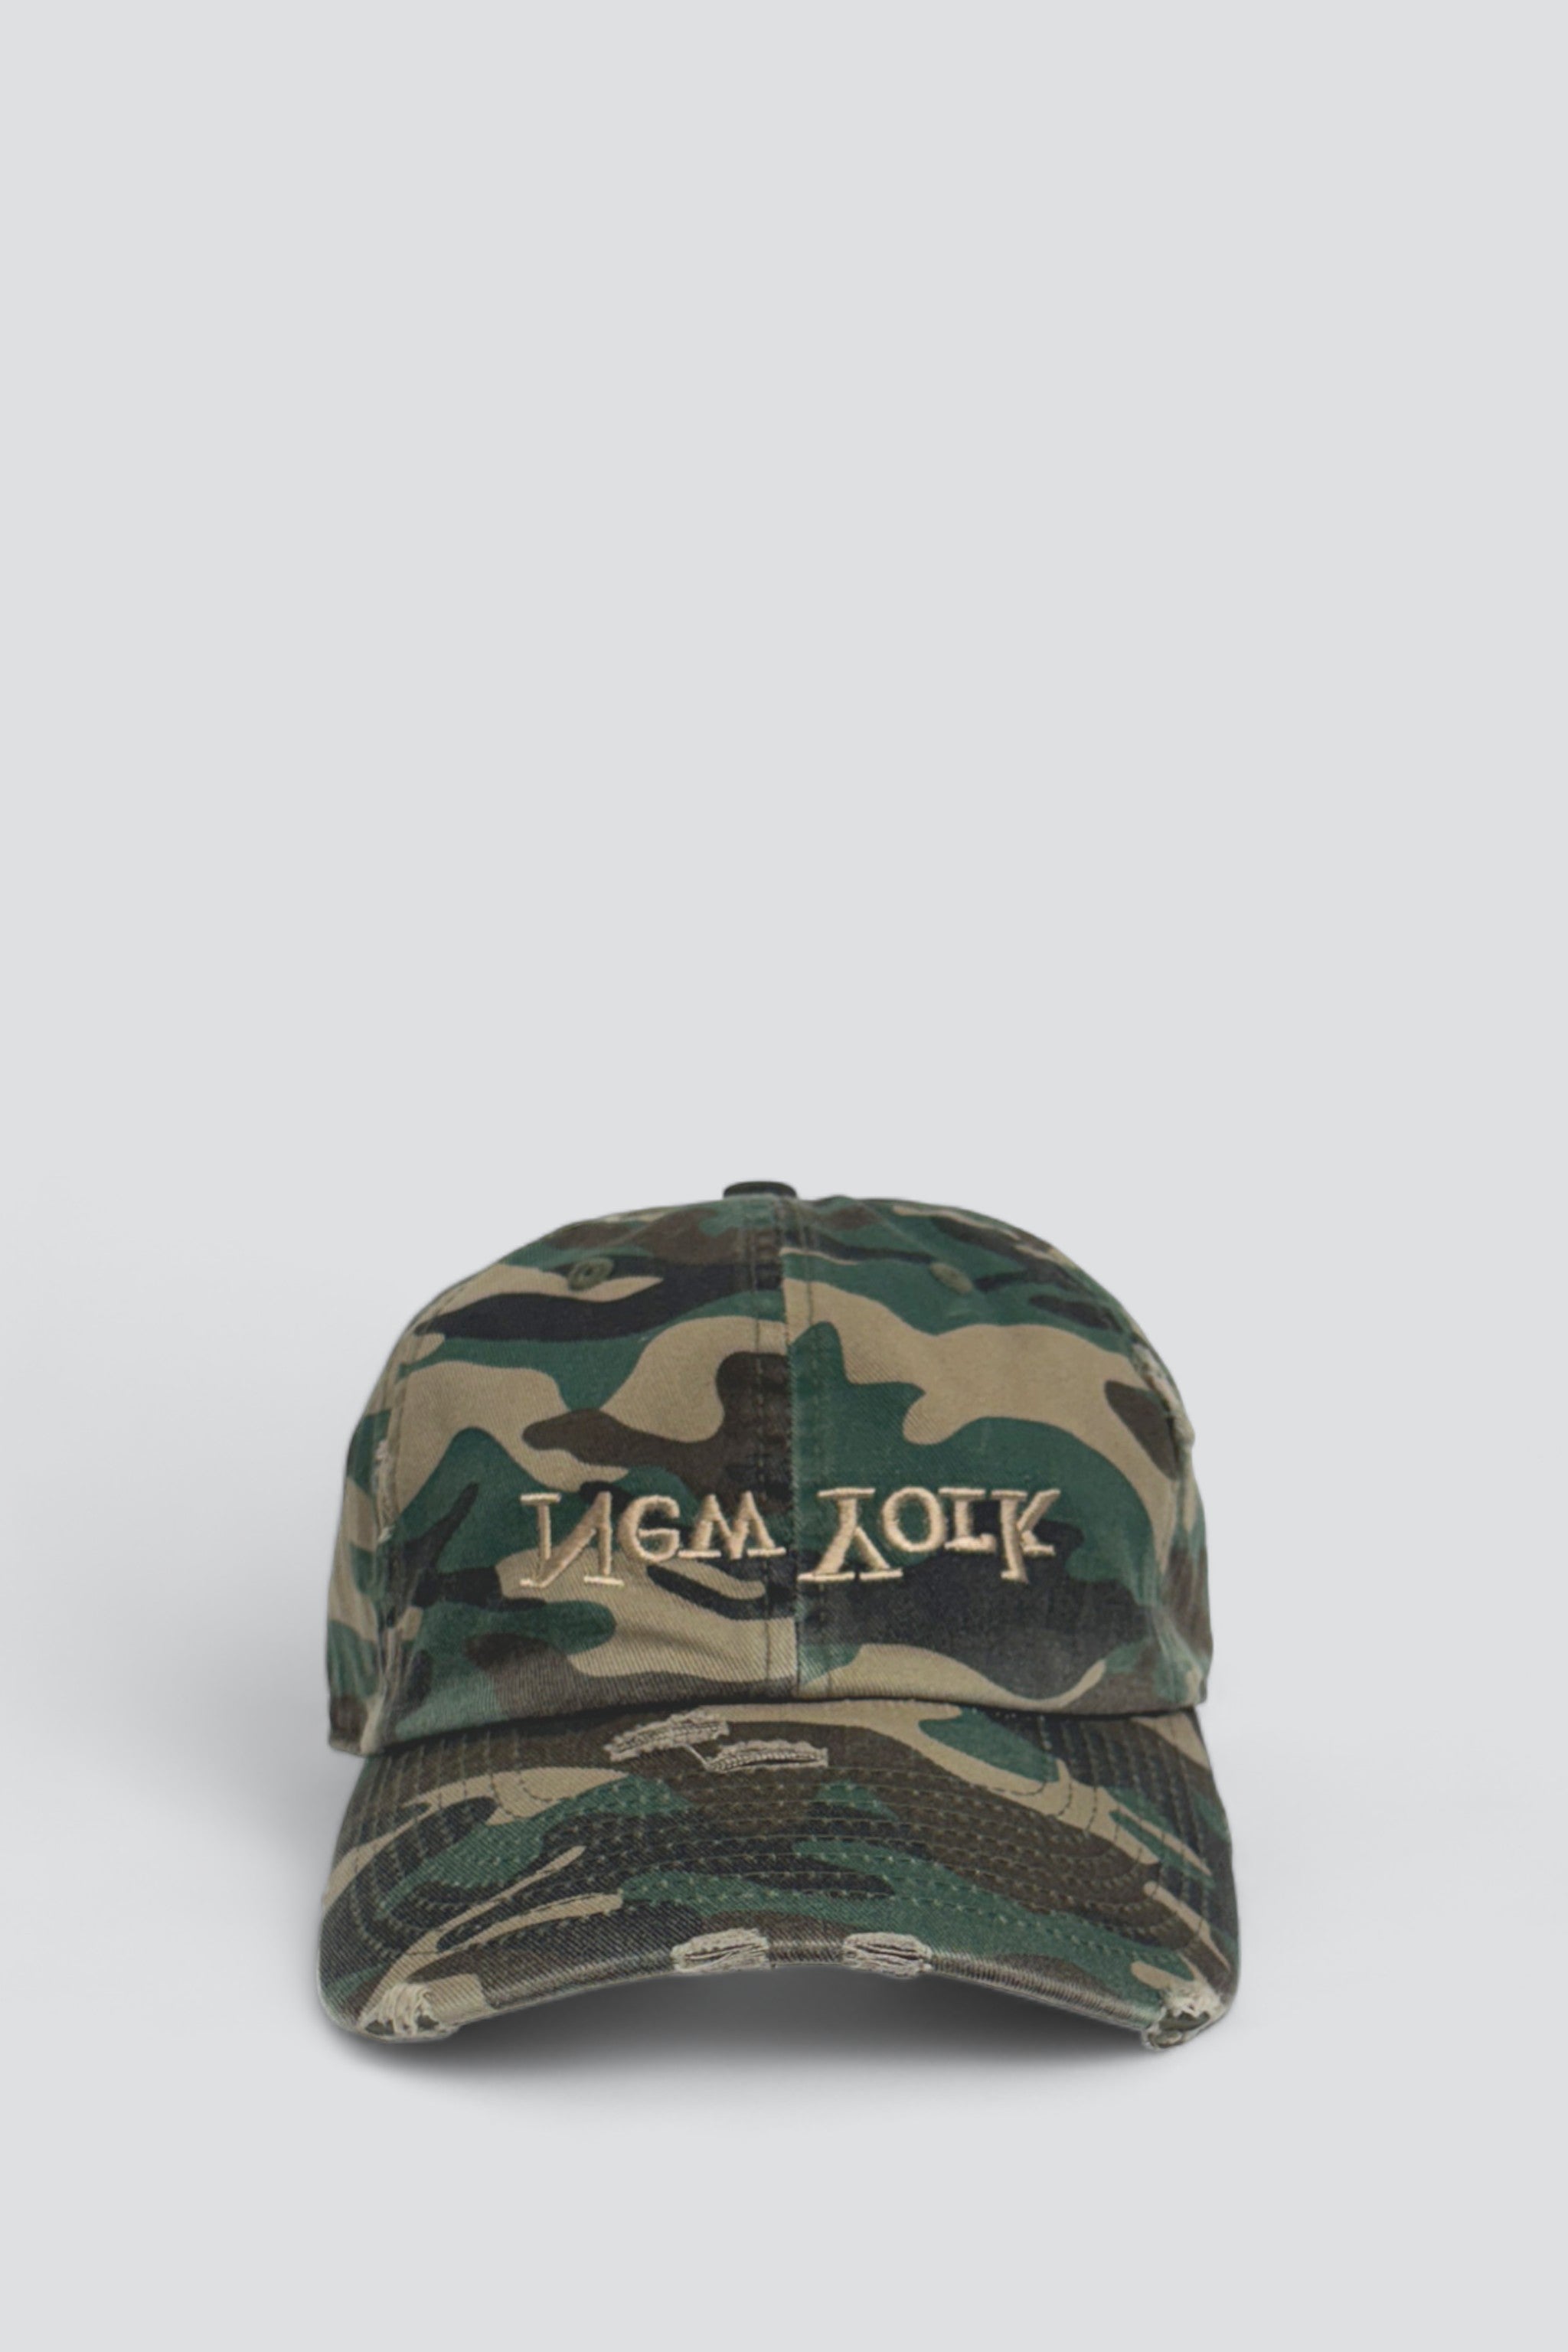 Distressed New York Embroidered Hat - Khaki Camo